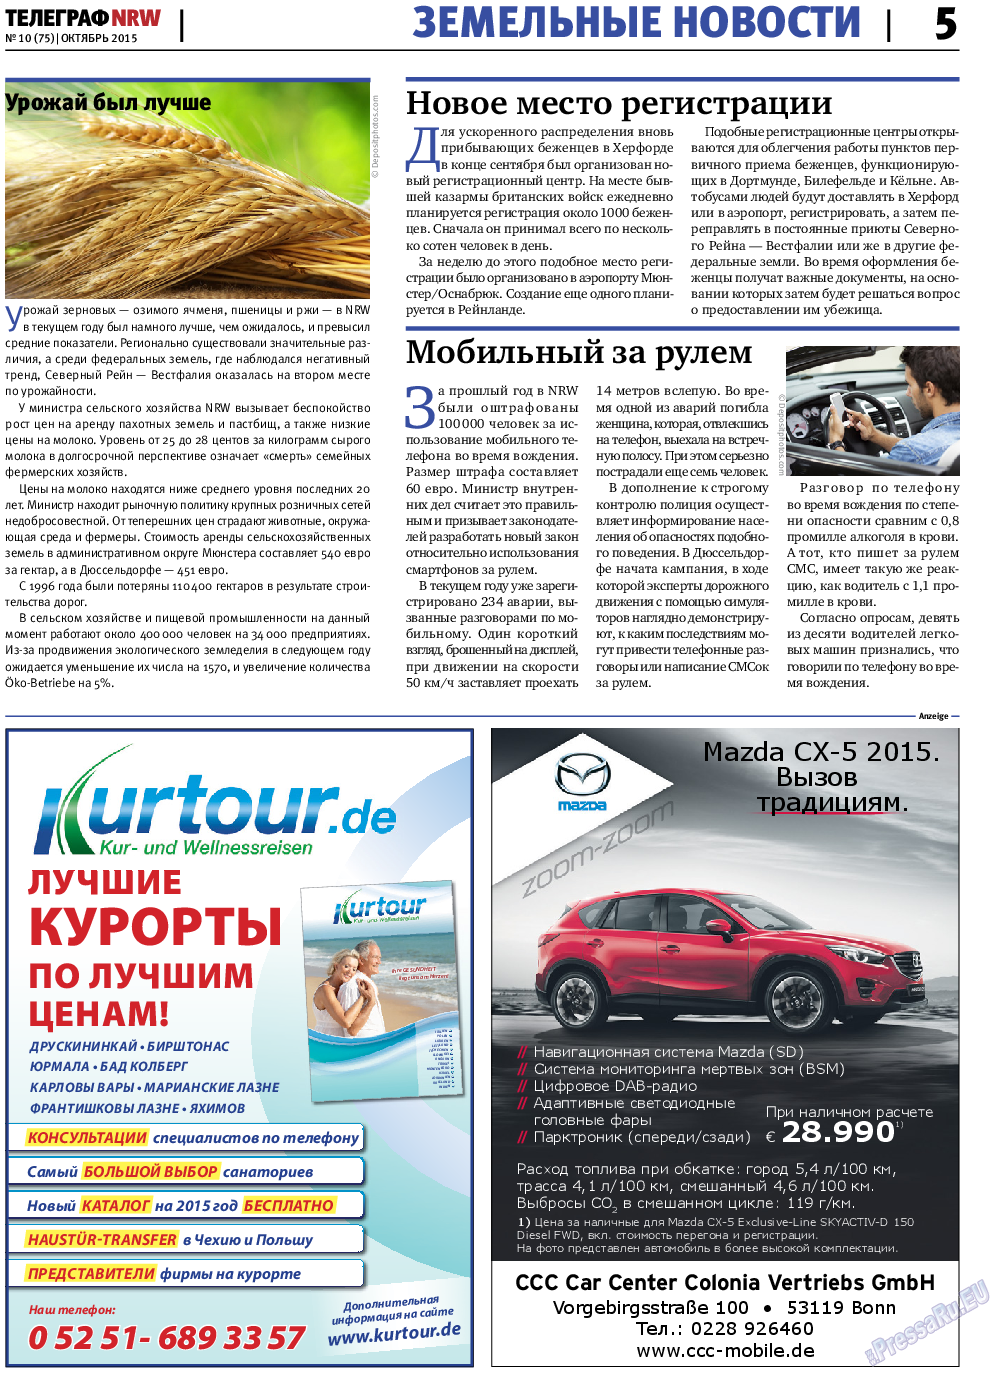 Телеграф NRW, газета. 2015 №10 стр.5